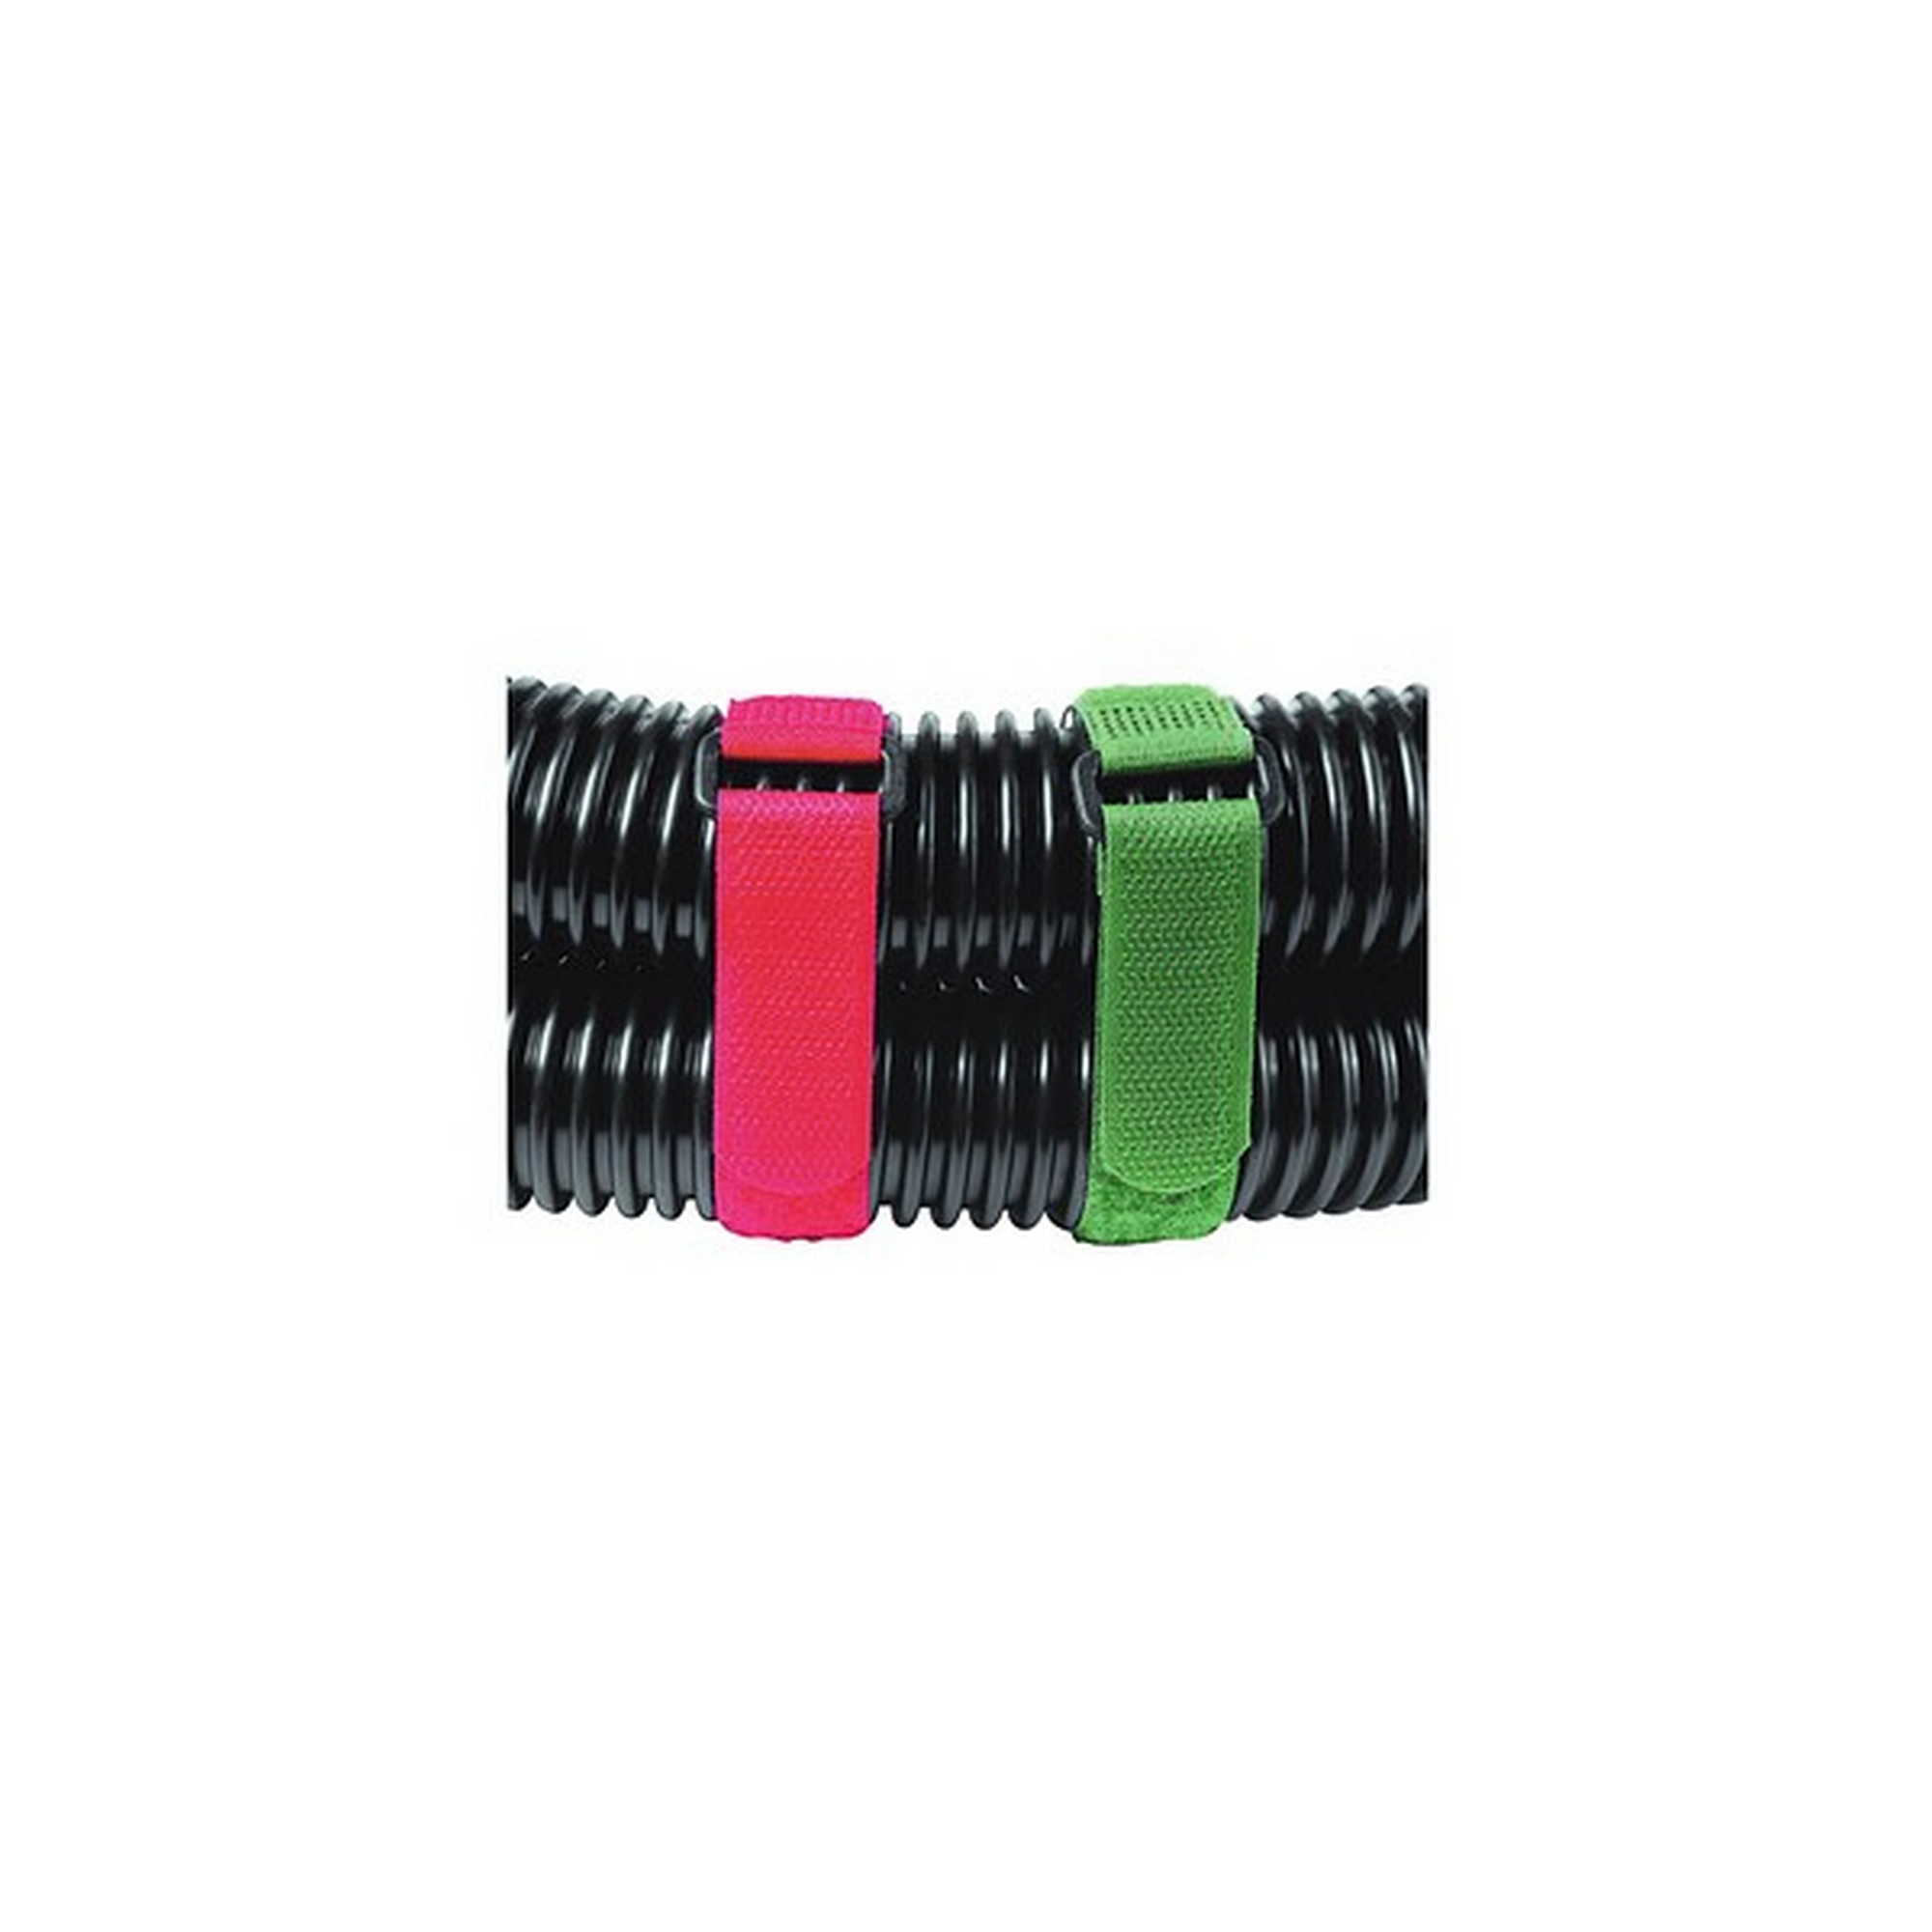 Klett-Kabelbinder farbig sortiert mit Öse 20 x 250 mm, 9 Stück + product picture